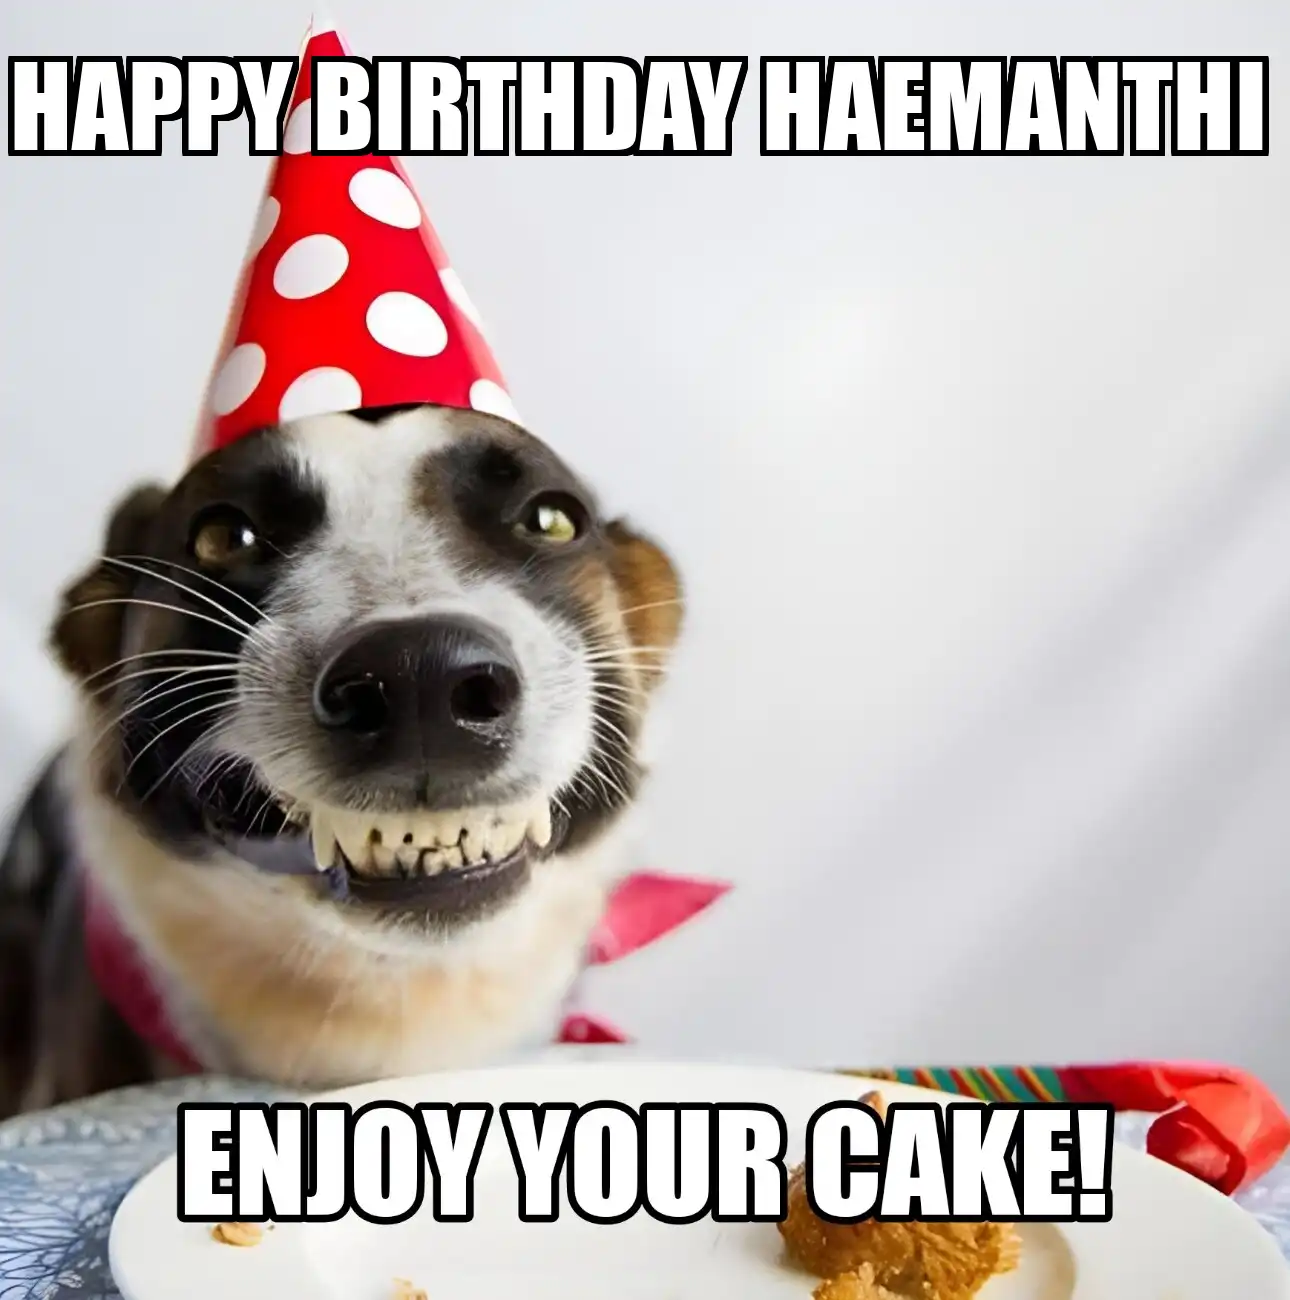 Happy Birthday Haemanthi Enjoy Your Cake Dog Meme